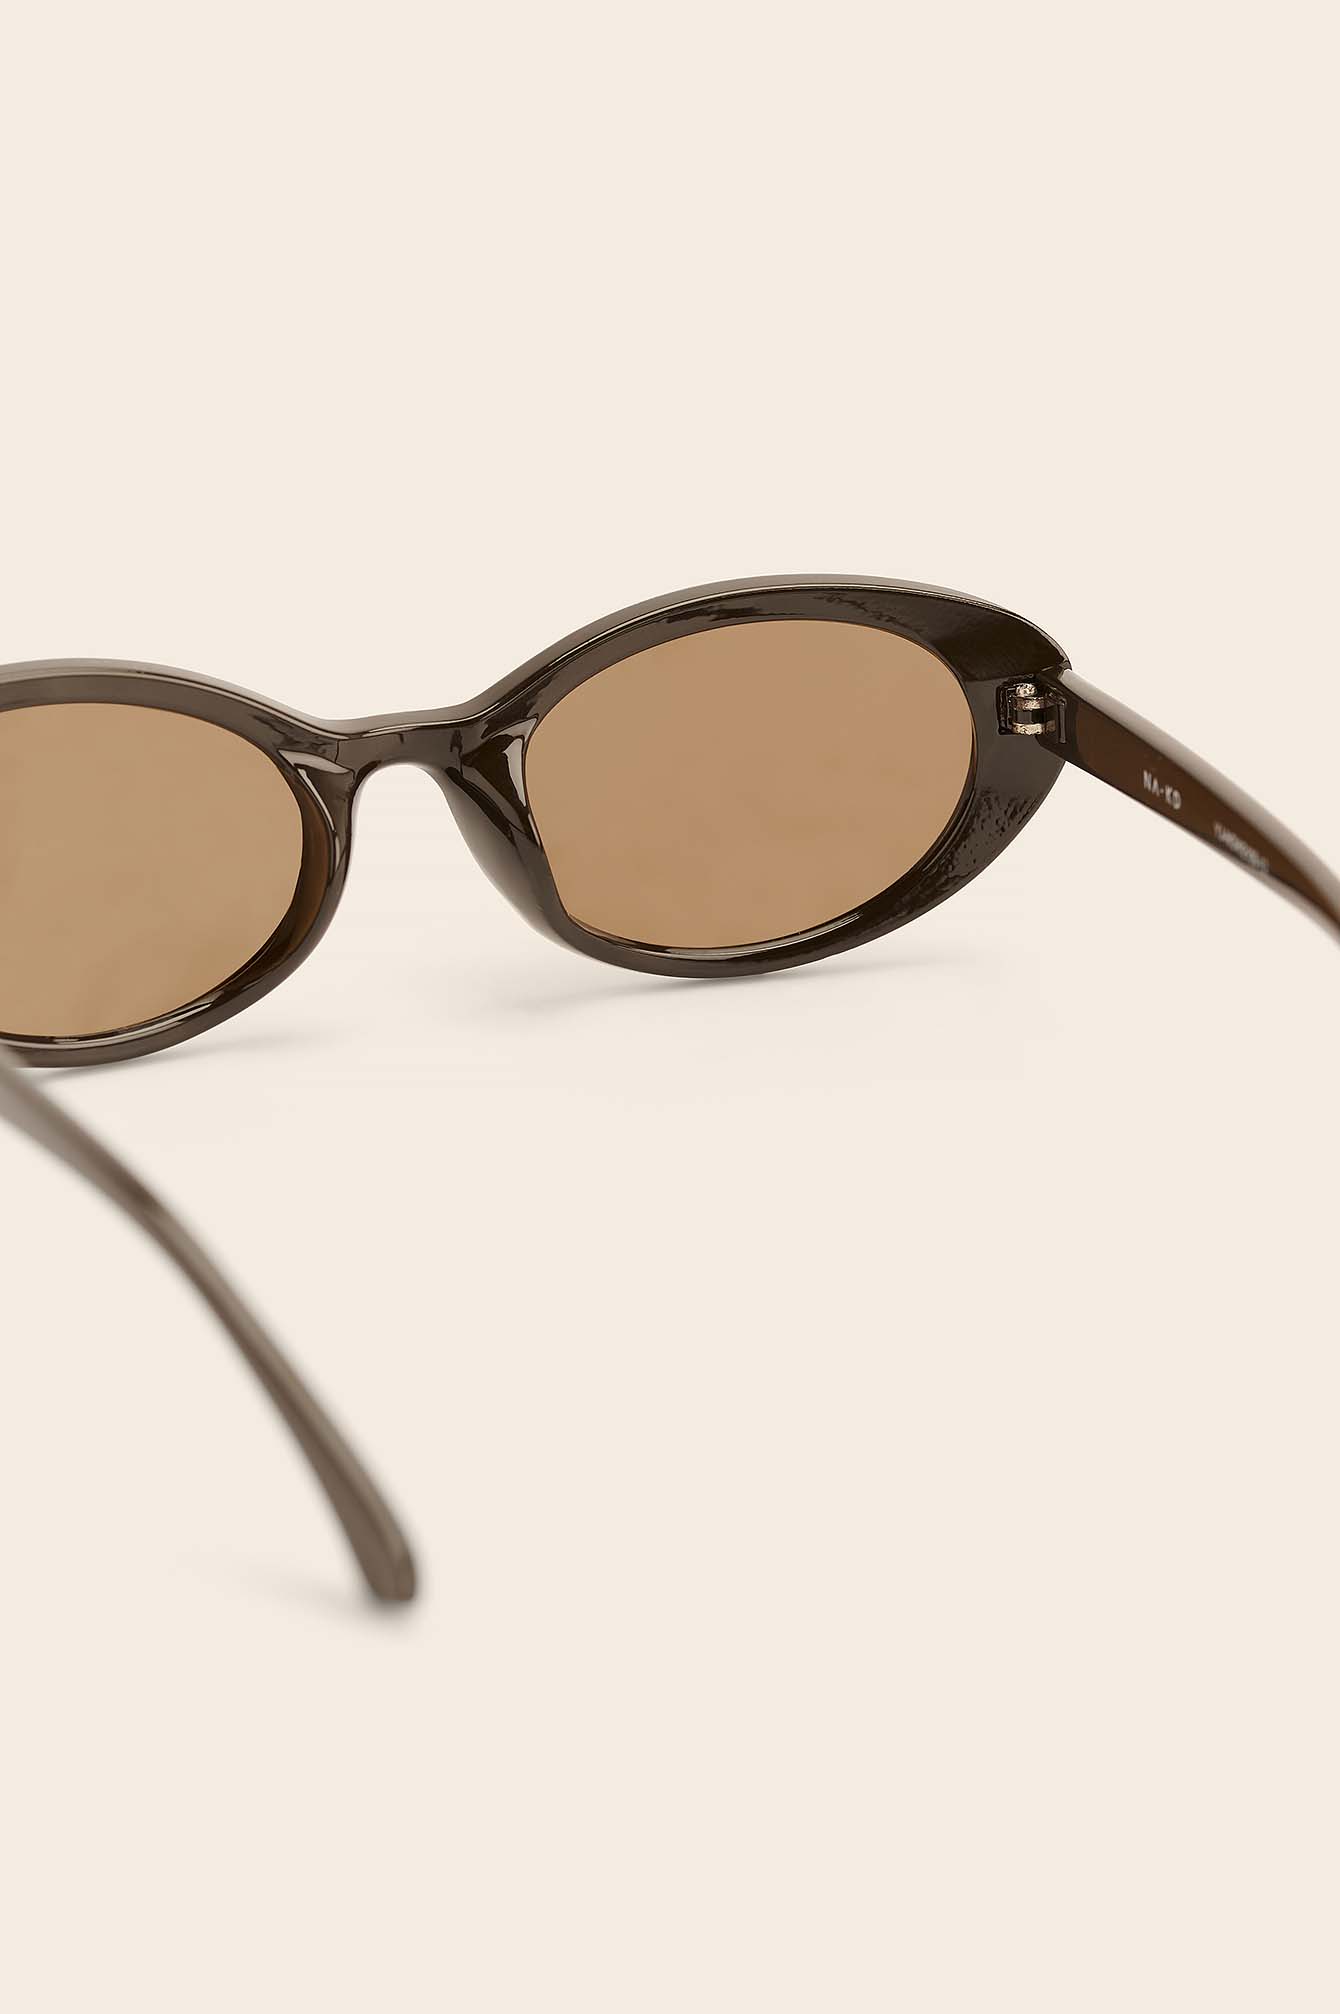 CARRERA Brille Accessoires Sonnenbrillen ovale Sonnenbrillen 